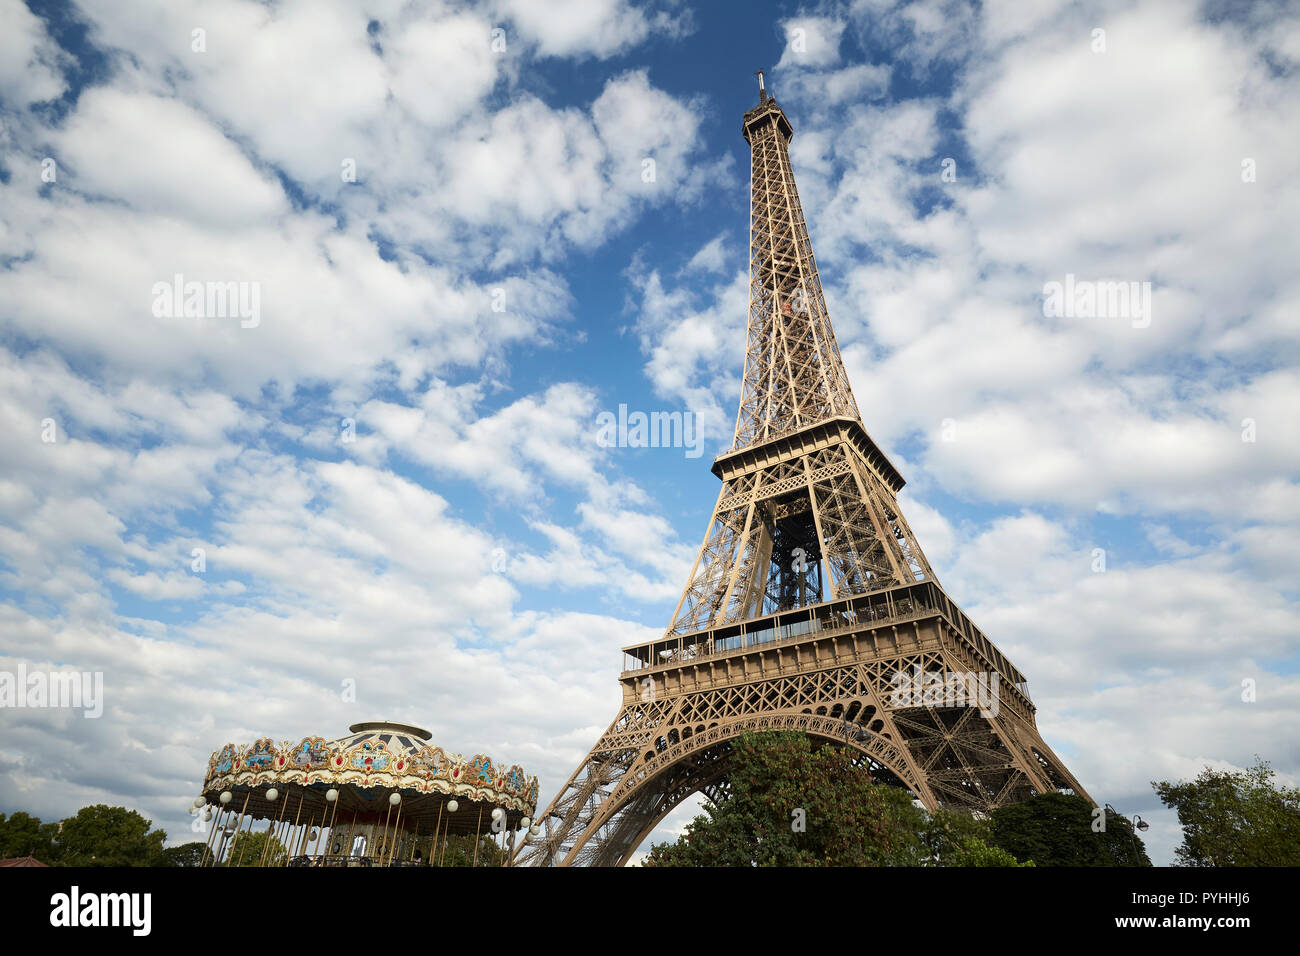 Paris, Ile-de-France, Francia - La Torre Eiffel - el principal monumento de la capital francesa. Foto de stock